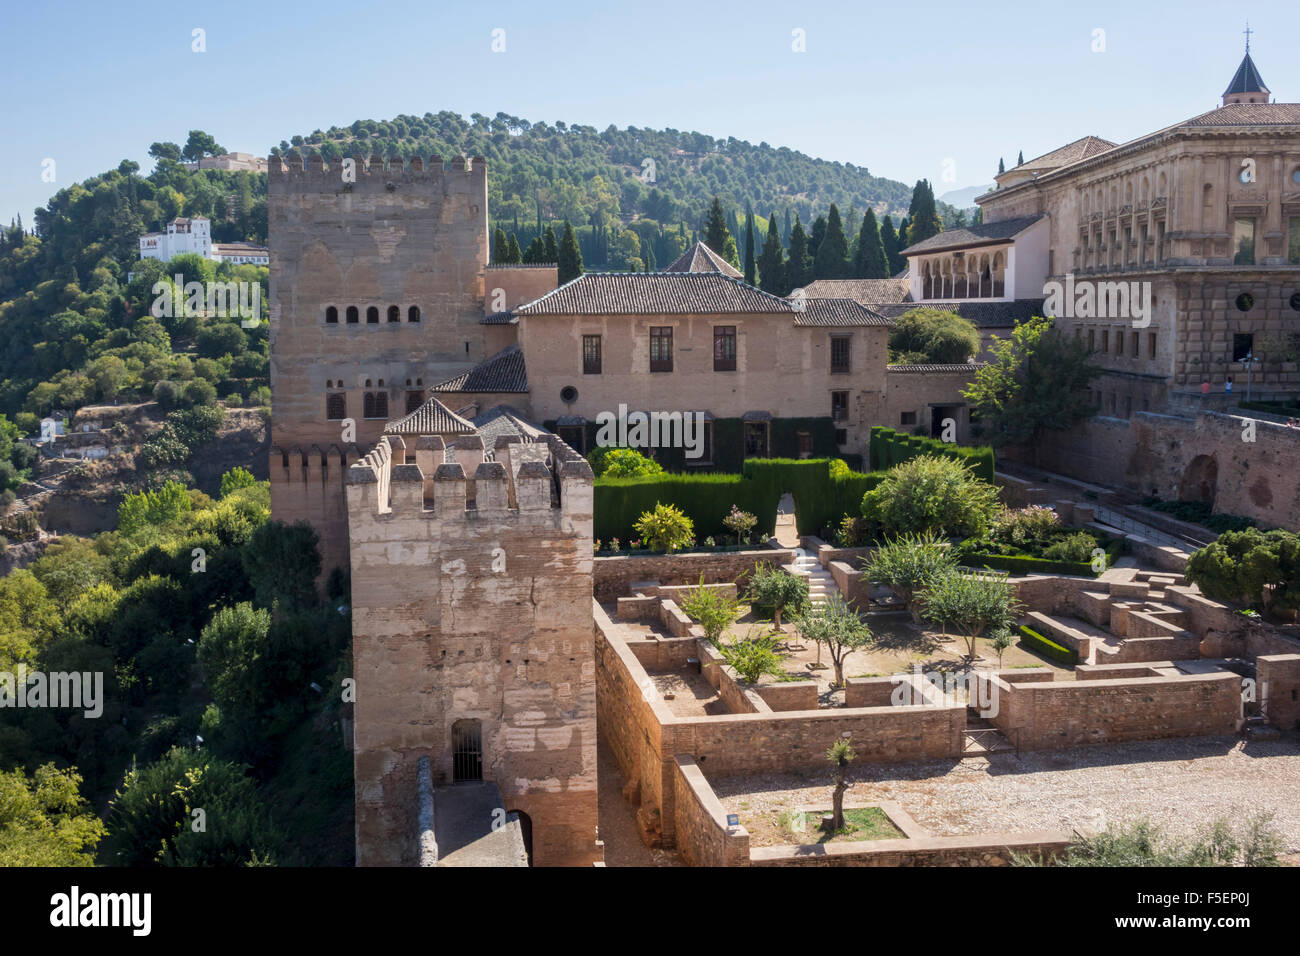 Alhambra Palace - Granada, Andalusia, Spagna, Europa - Giardini e Palacios Nazaries Foto Stock